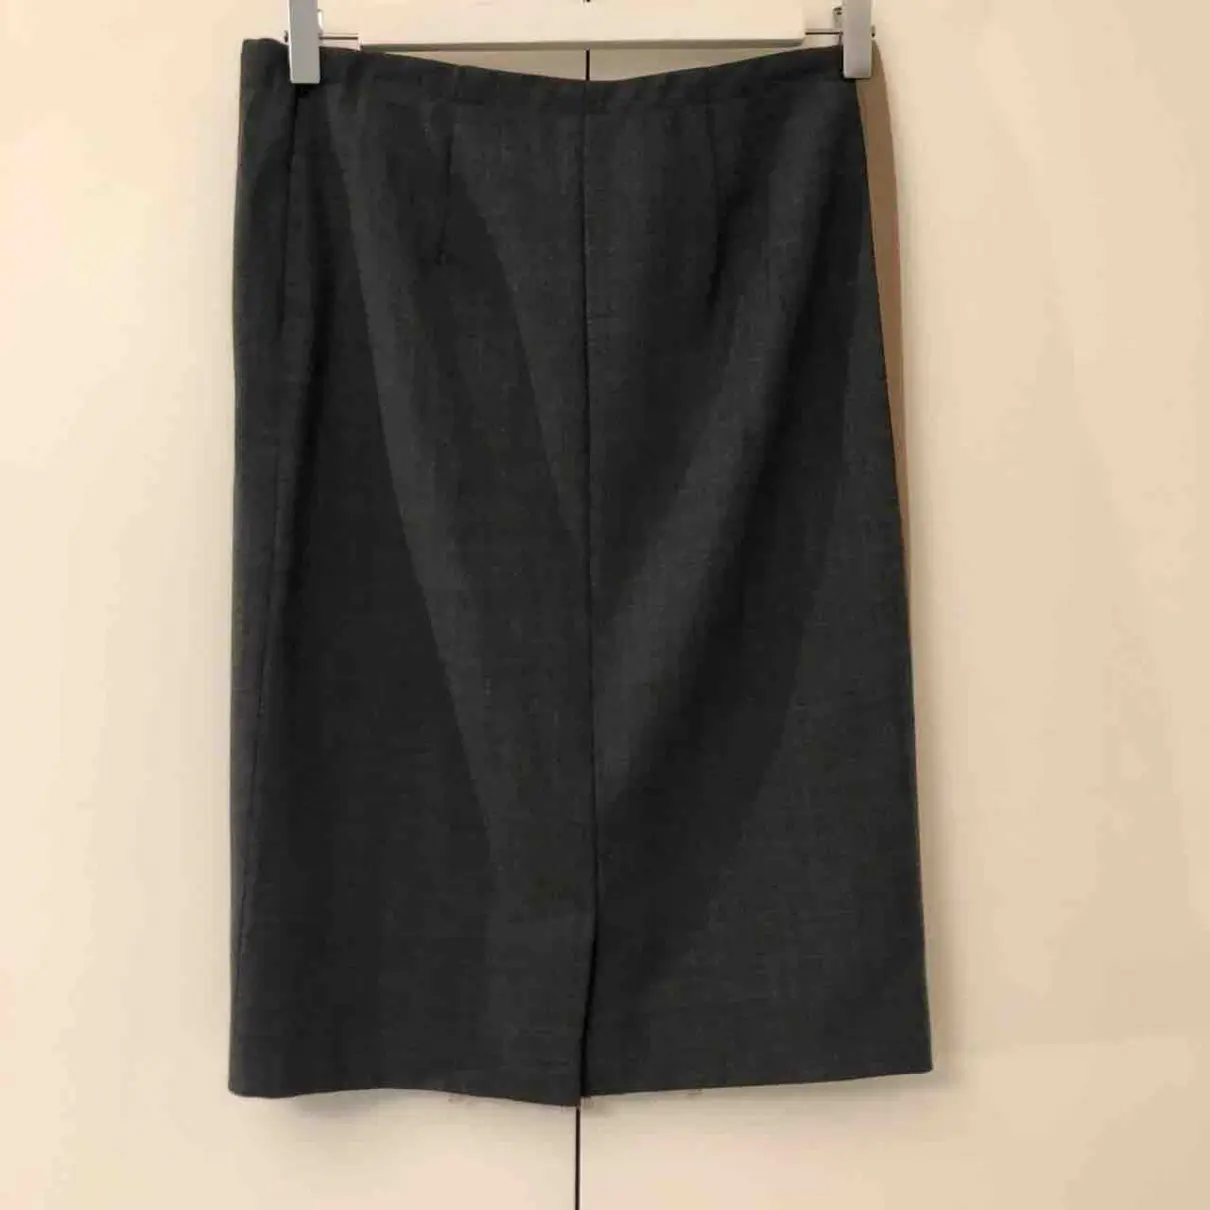 Buy Erika Cavallini Mid-length skirt online